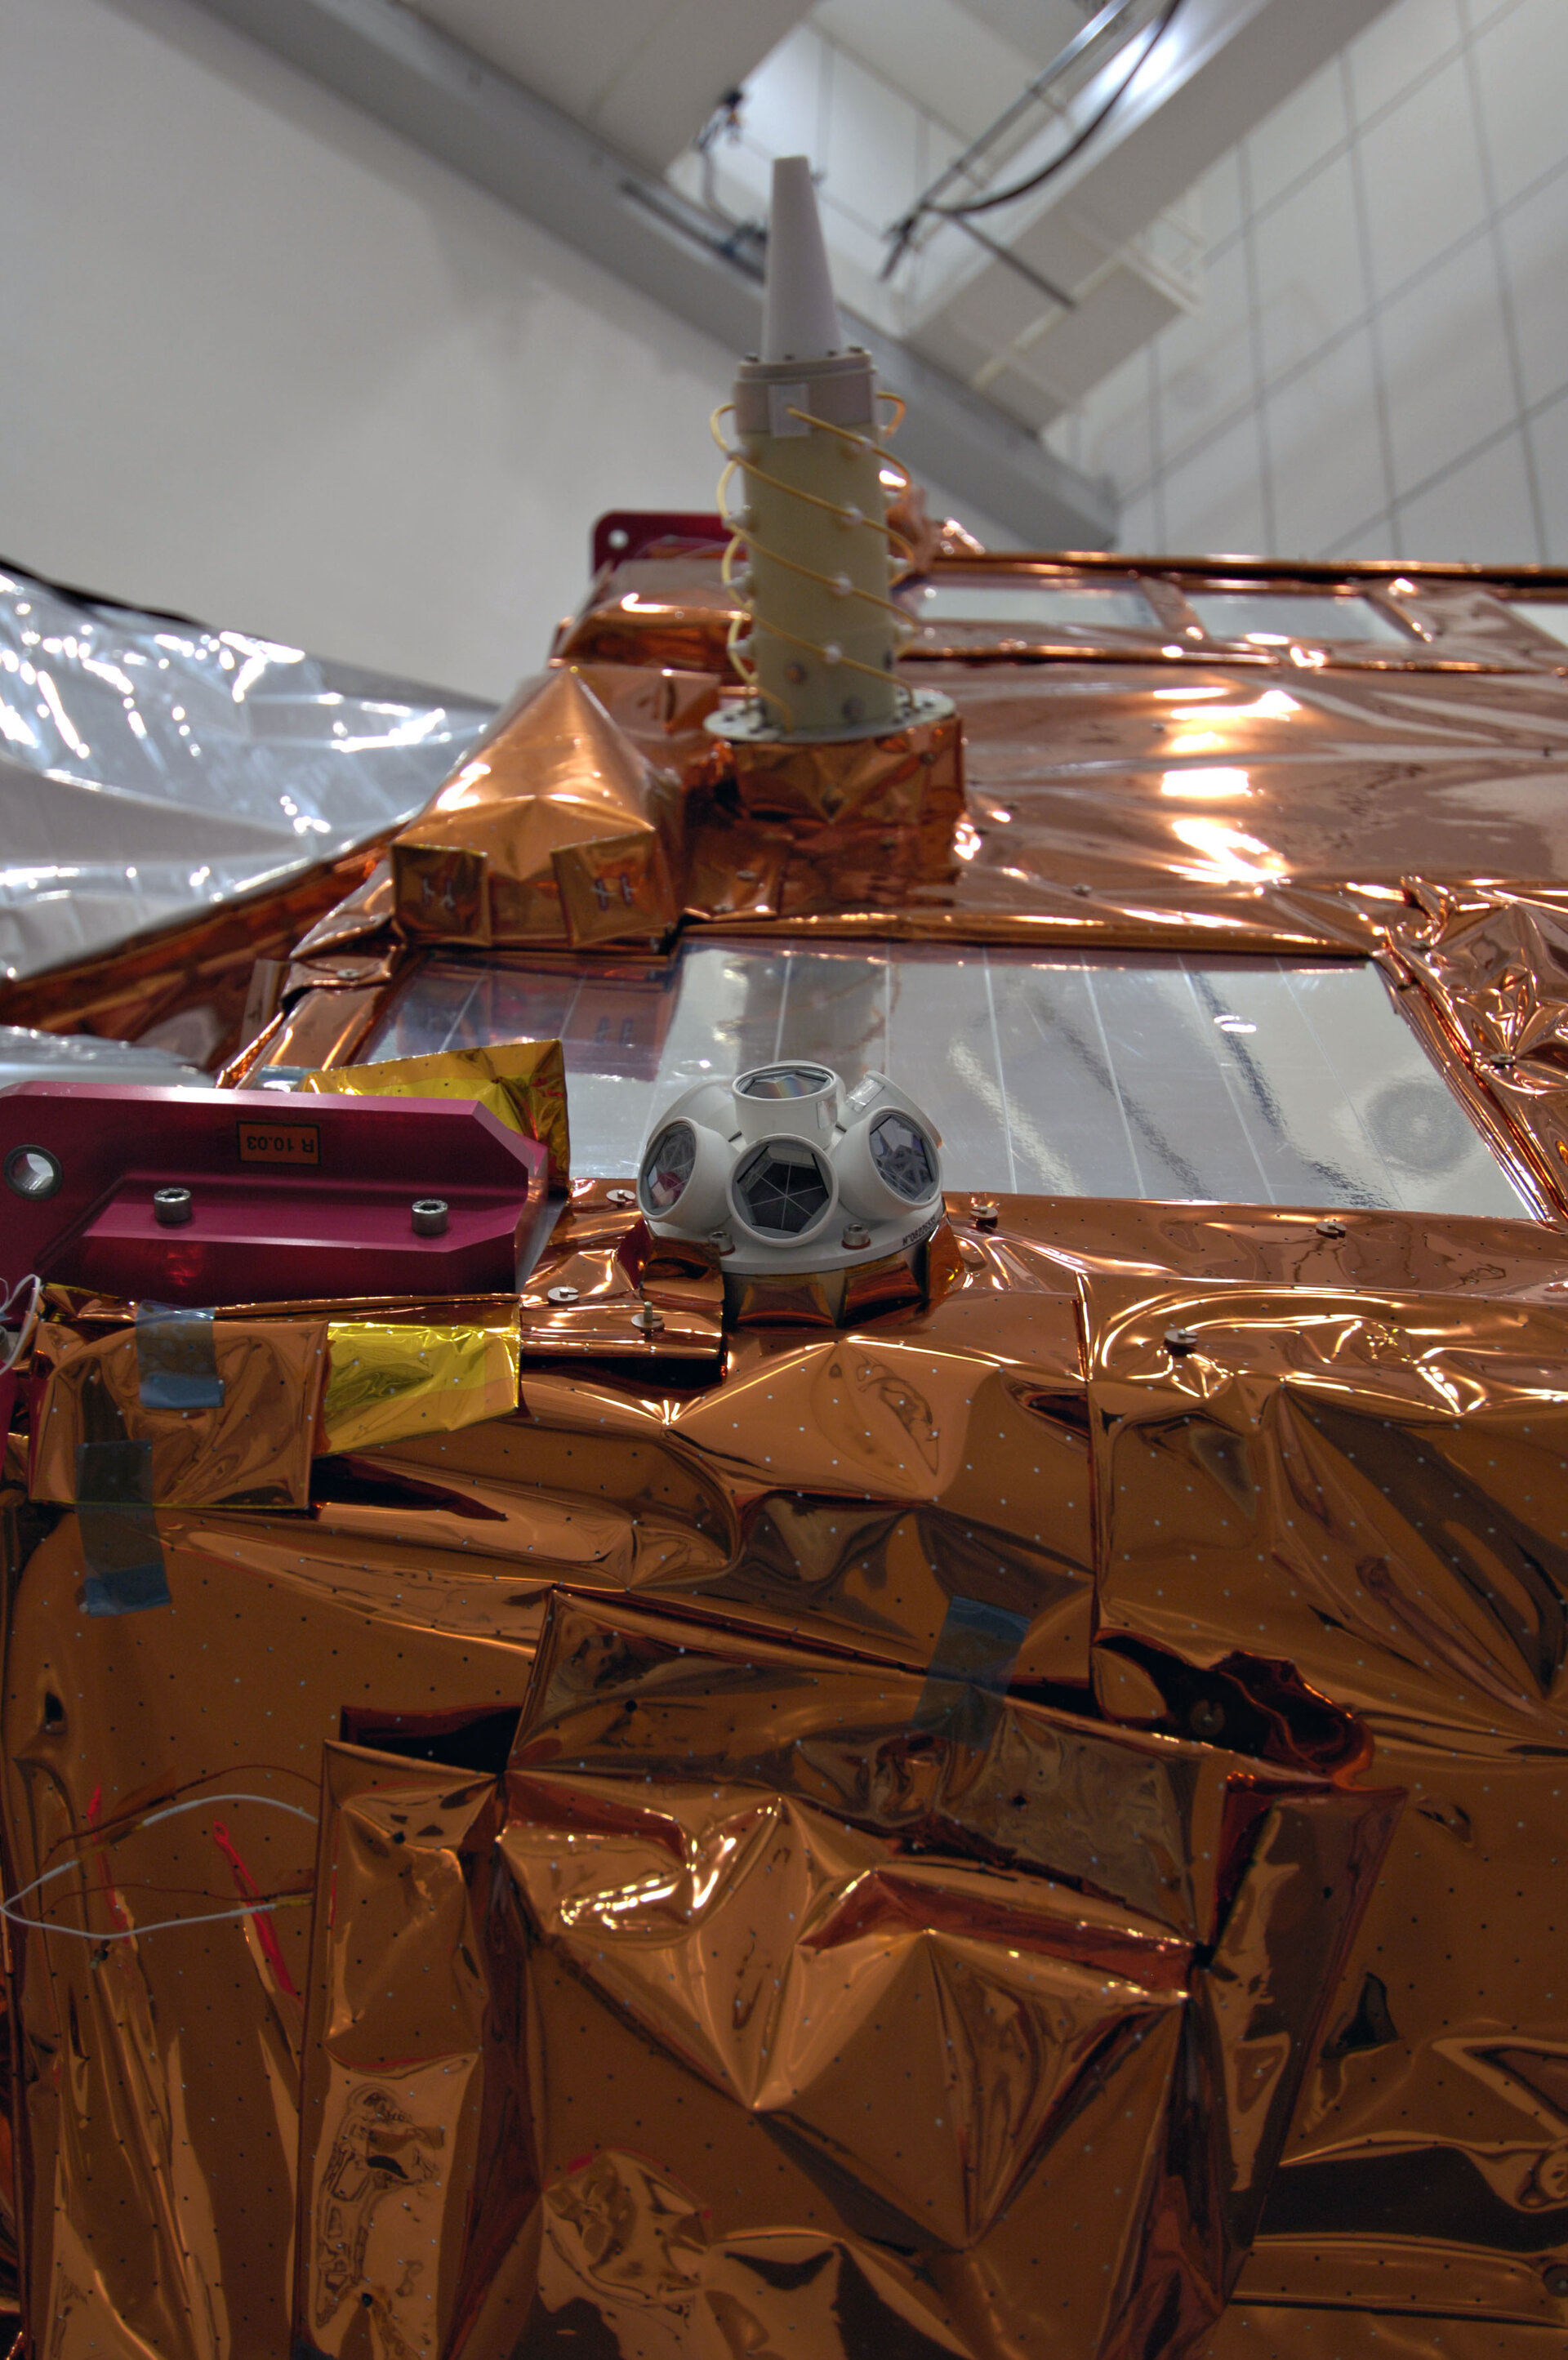 Orbitography systems mounted on ESA's Cryosat satellite